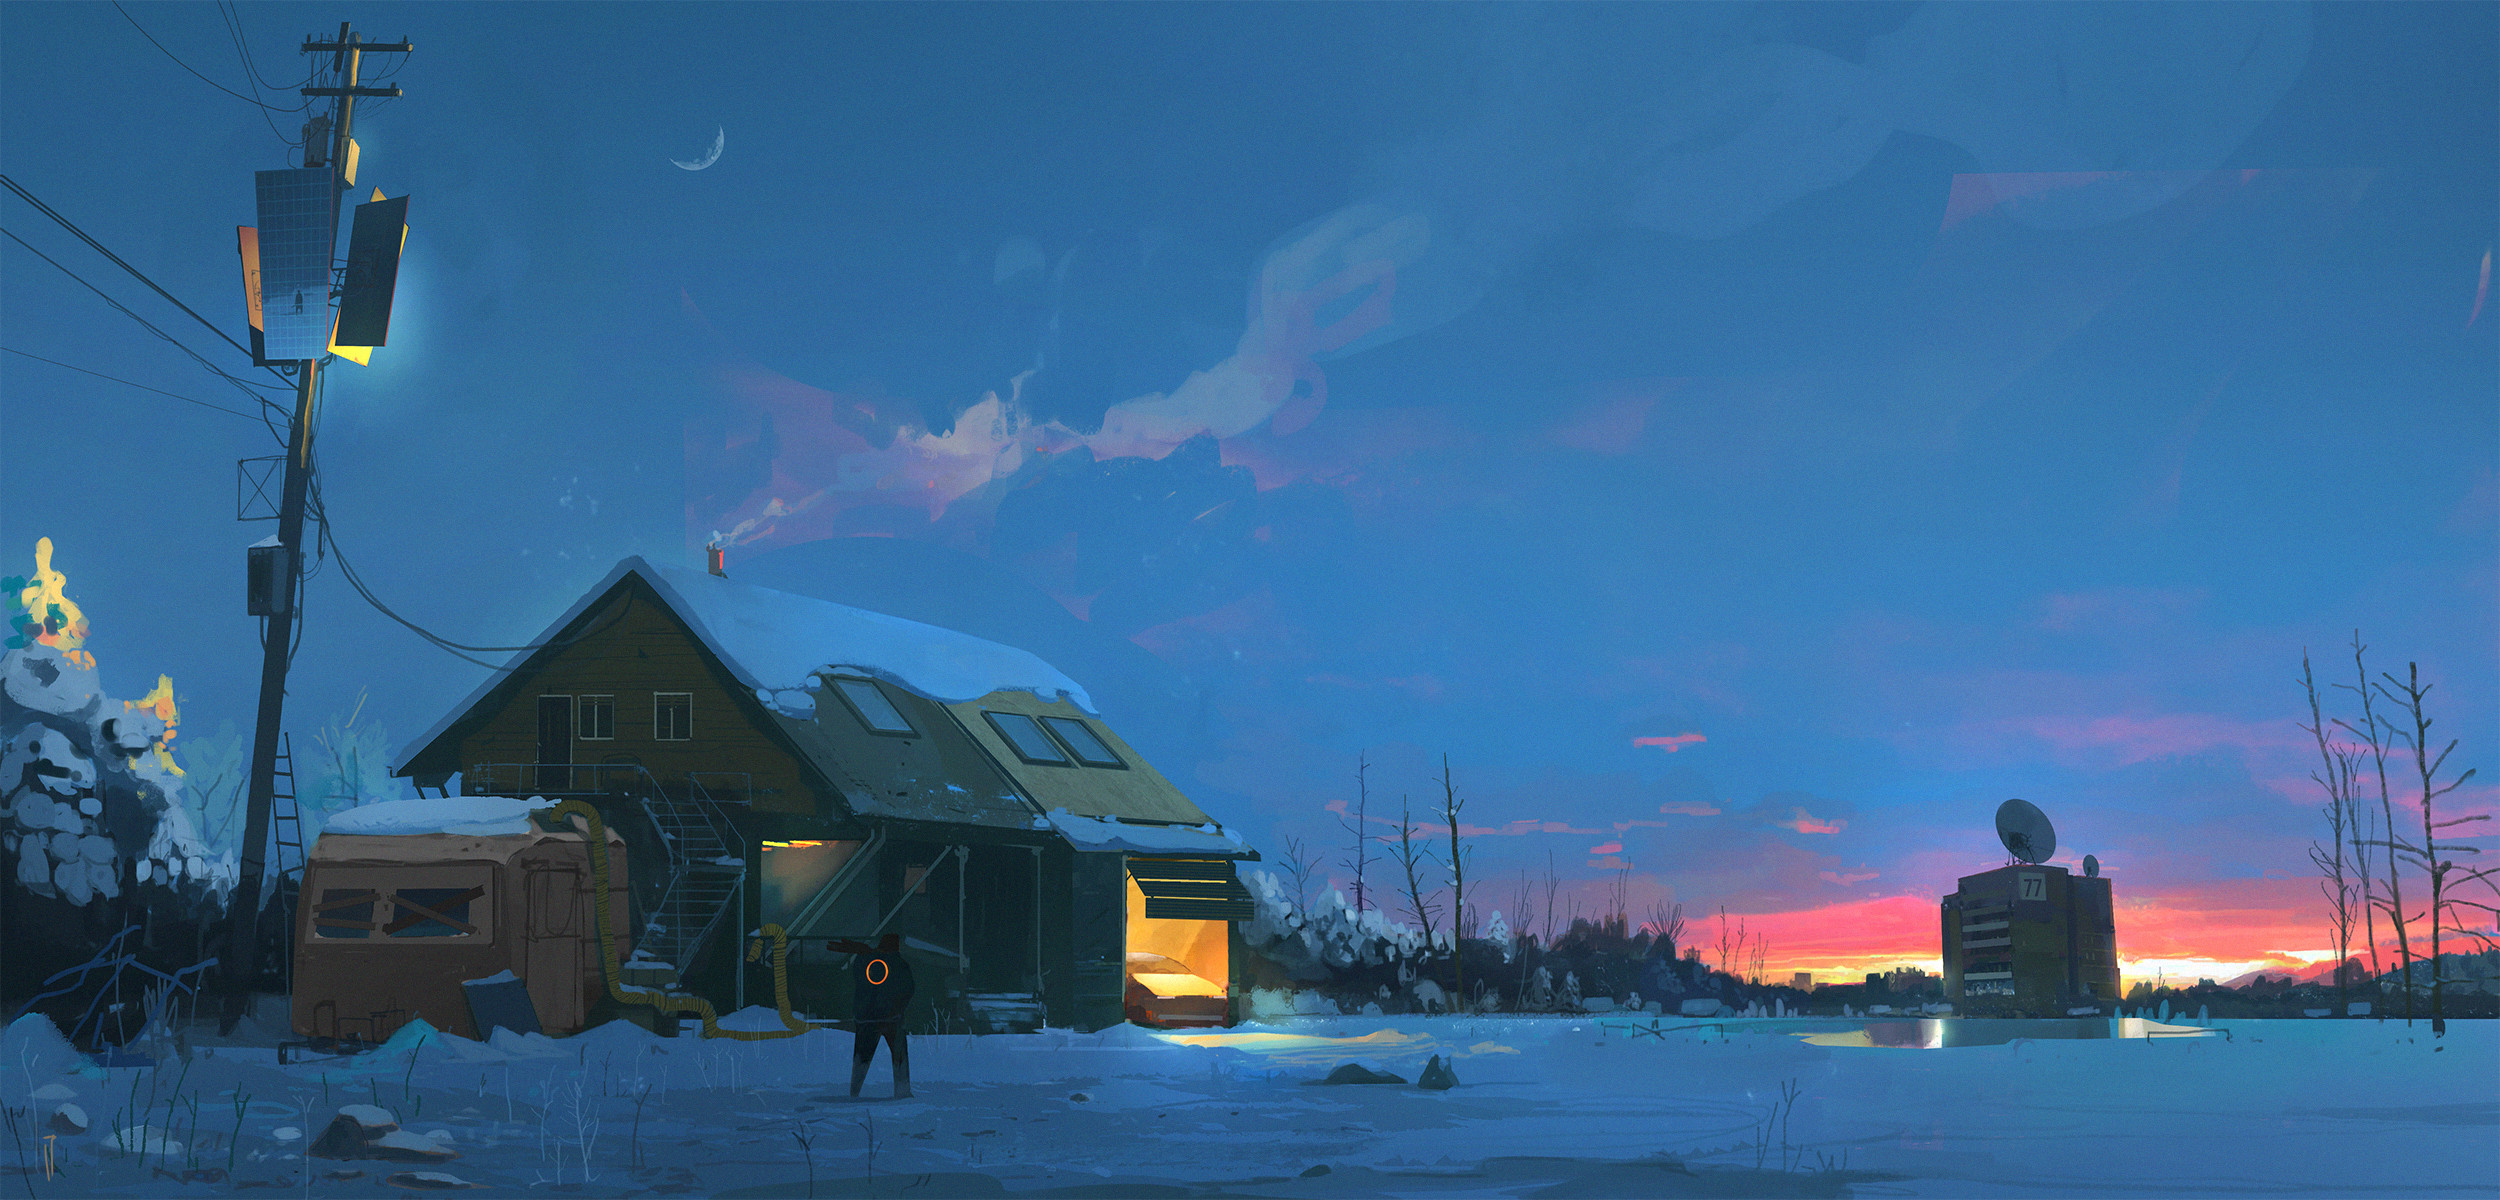 Ismail Inceoglu Digital Art Artwork Illustration Winter Snow Landscape Sunset House Moon Nature Sky 2500x1200